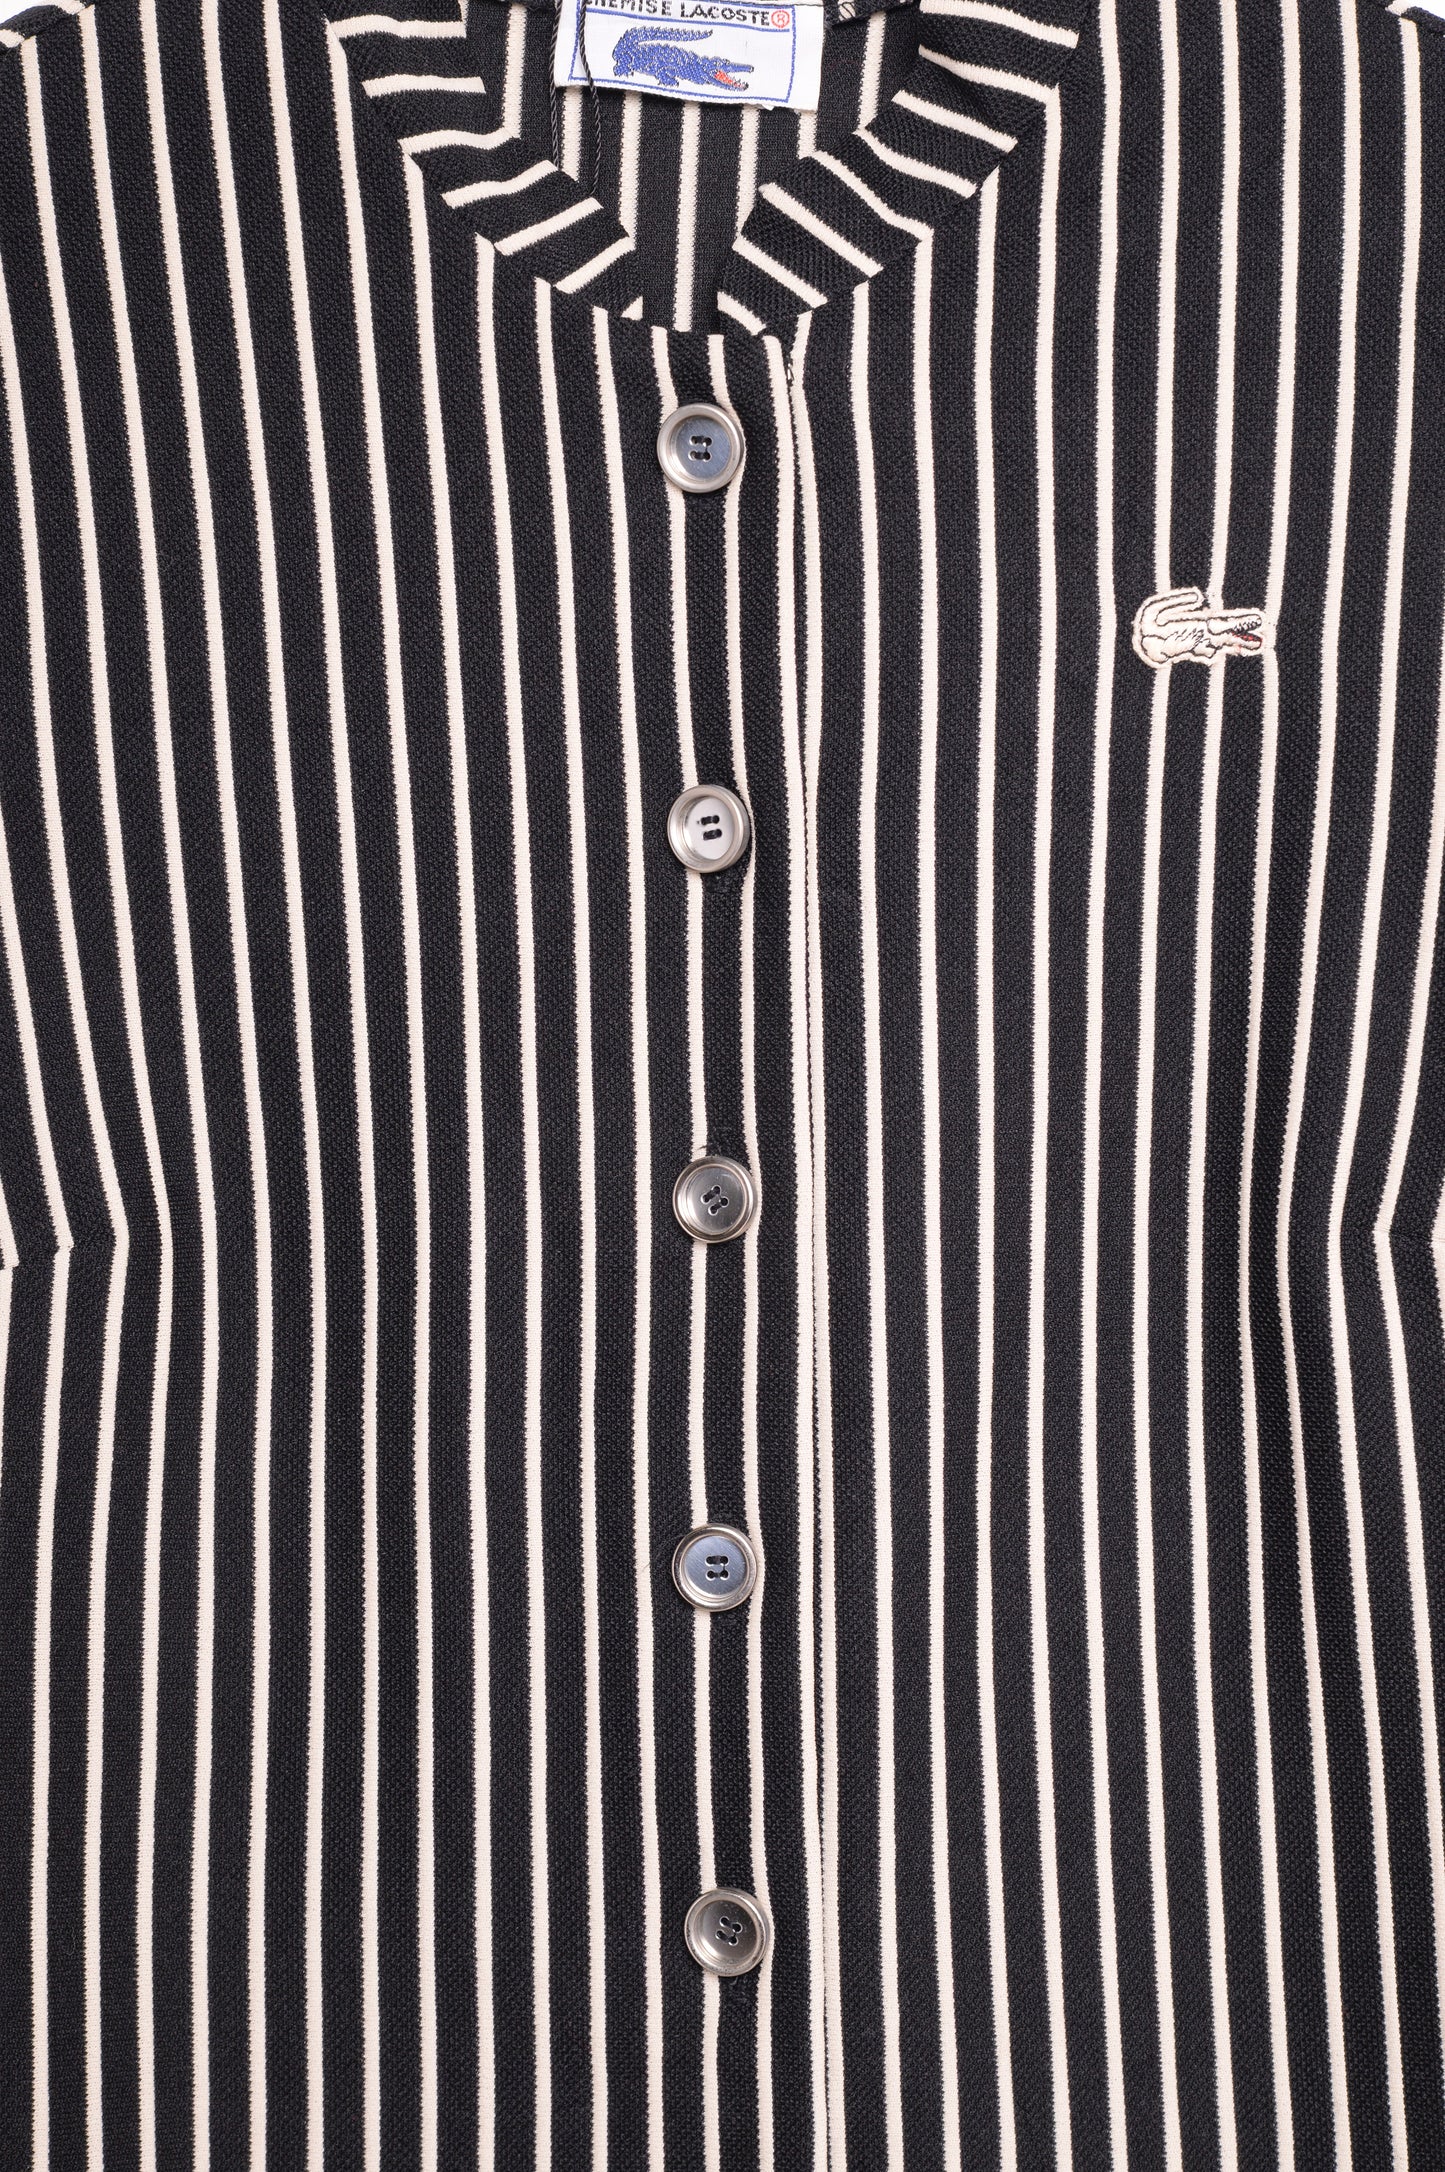 1960s Striped Lacoste Blazer